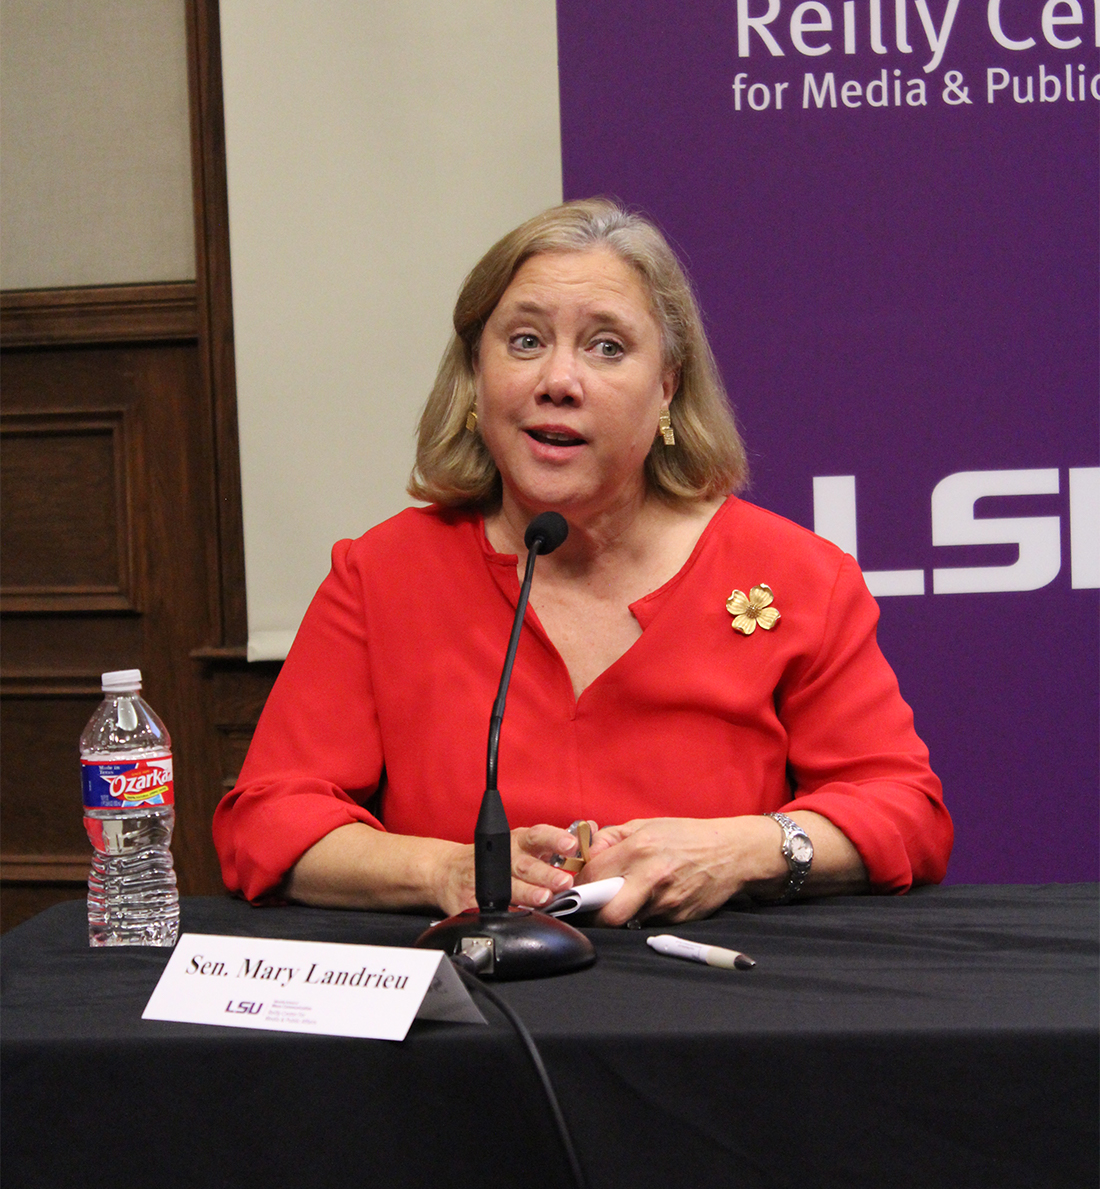 Senator Mary Landrieu moderates the panel on sexual harassment in media and politics